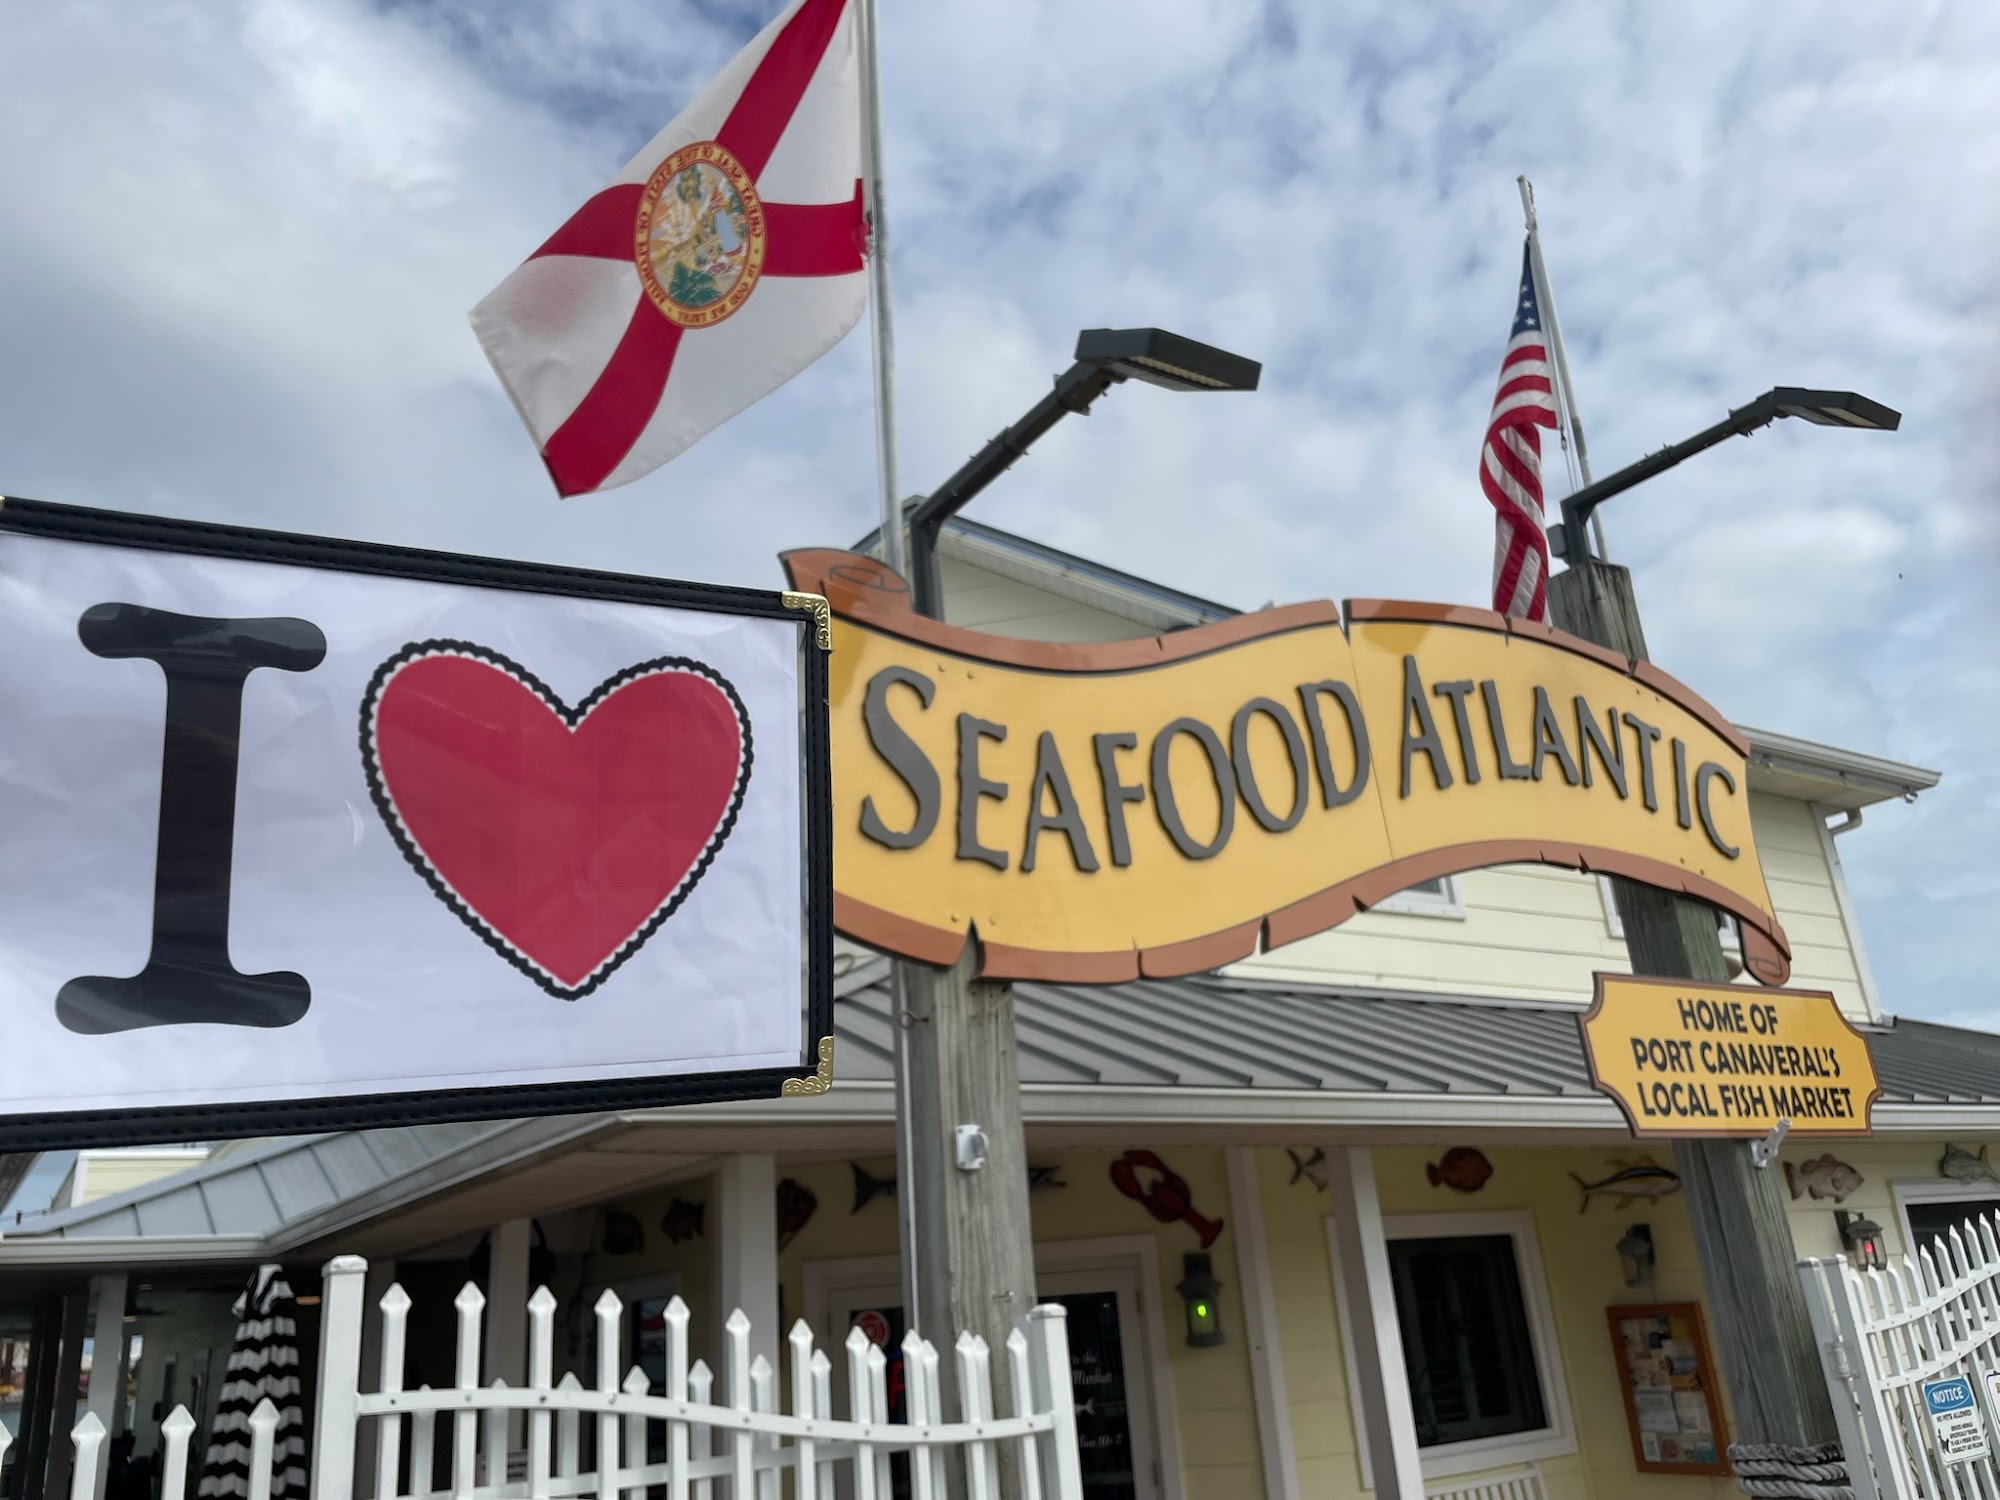 Seafood Atlantic